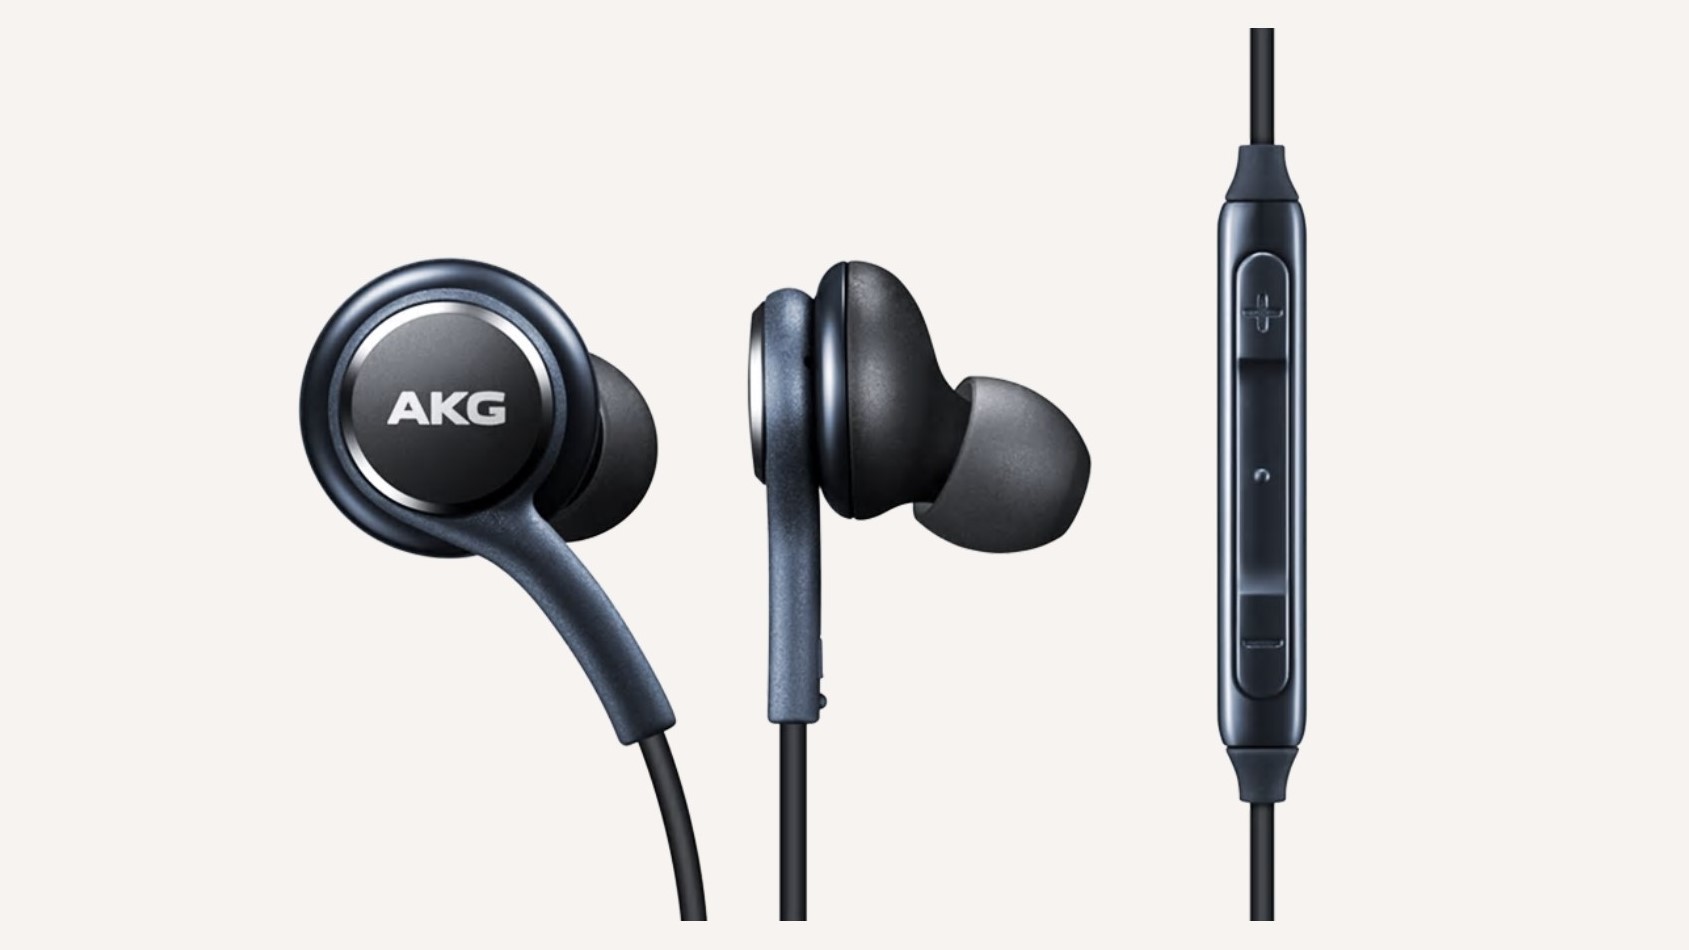 Samsung Galaxy AKG headphones